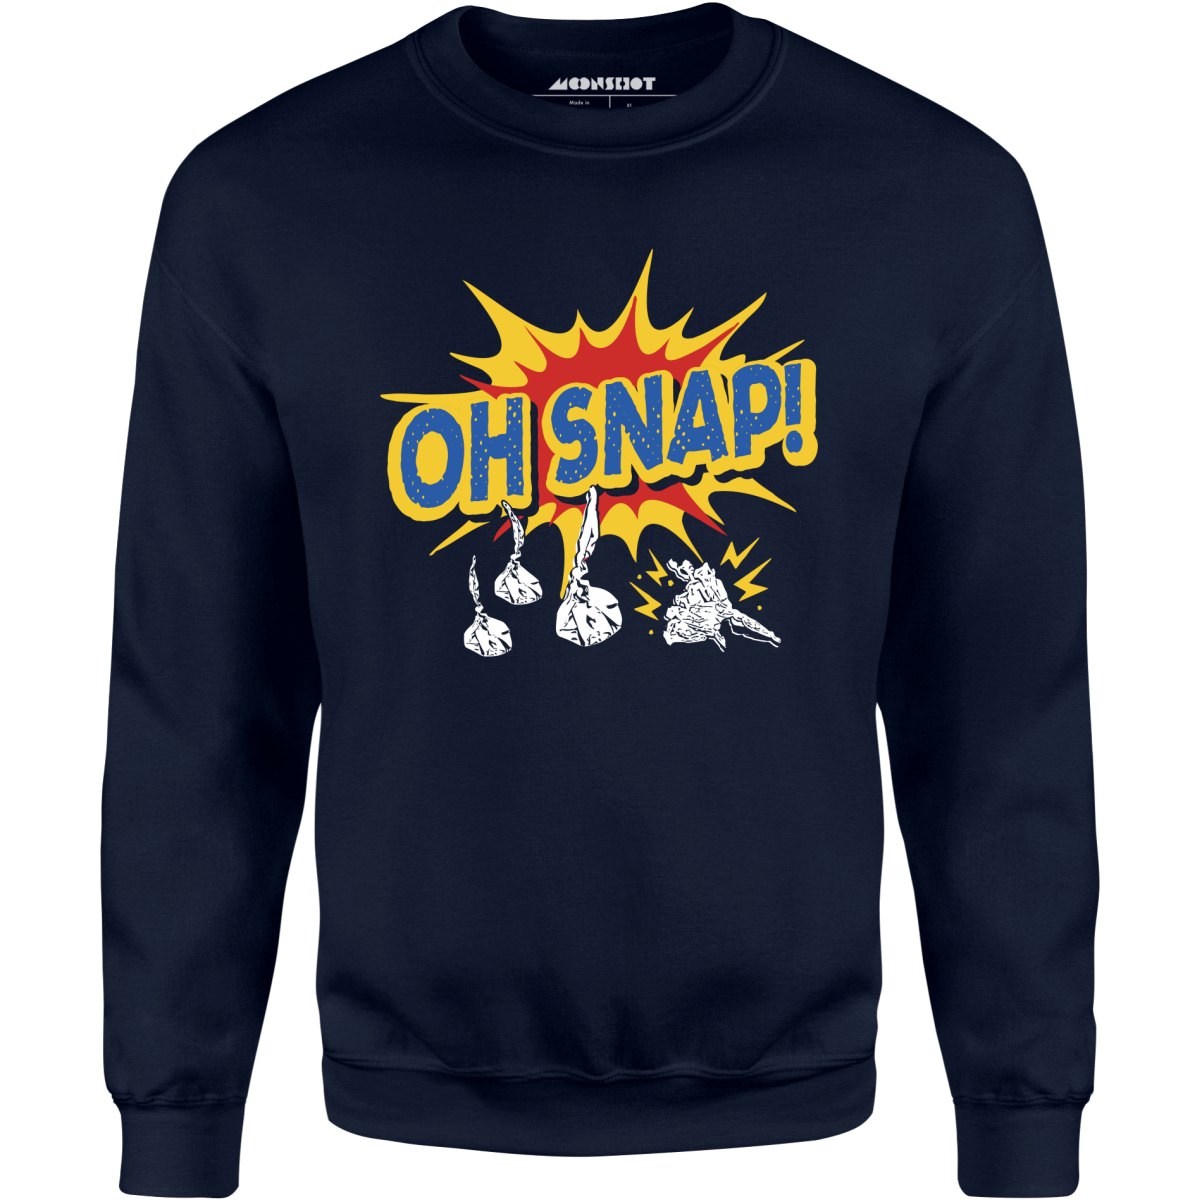 Oh Snap! - Unisex Sweatshirt